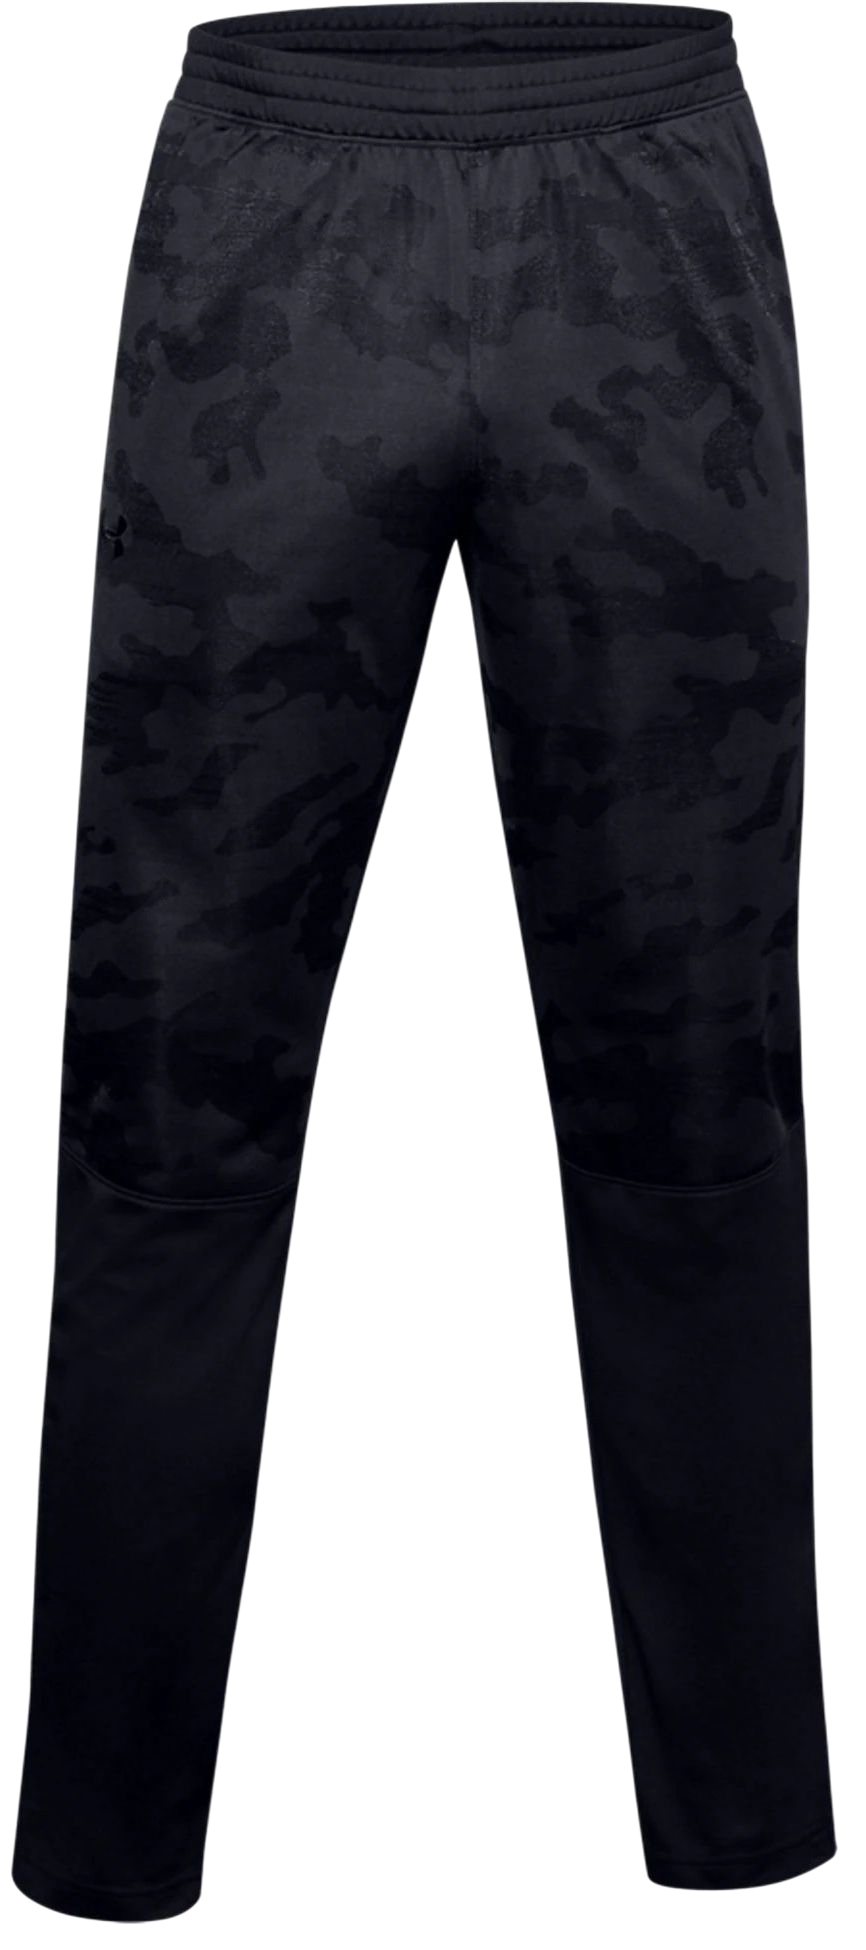 Men's trousers Under Armour SportStyle Pique Track Pant Camo - black, Tennis Zone